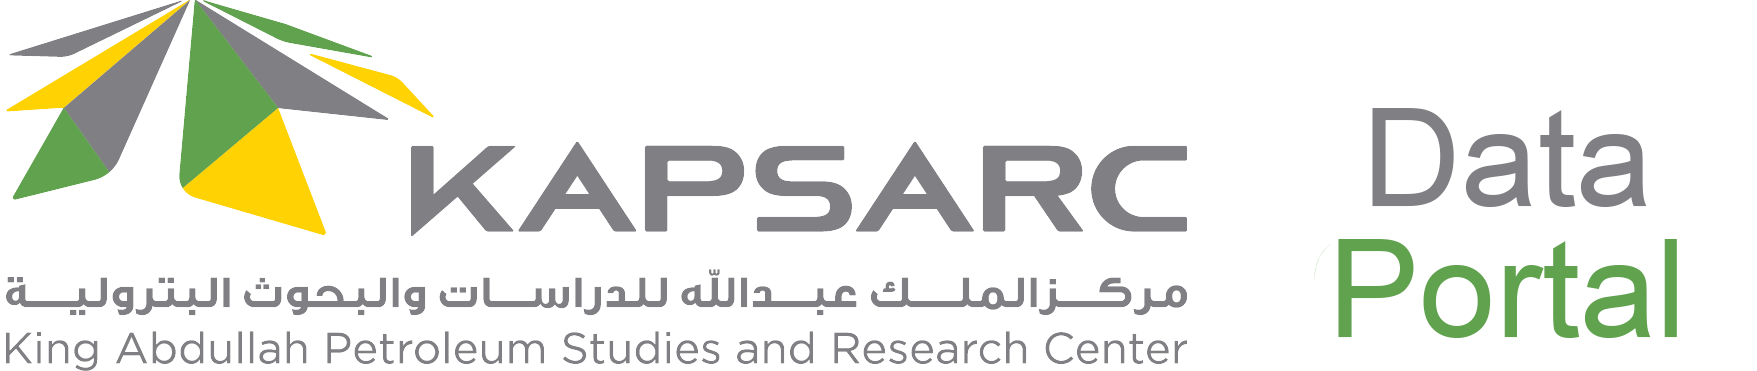 KAPSARC Data Portal